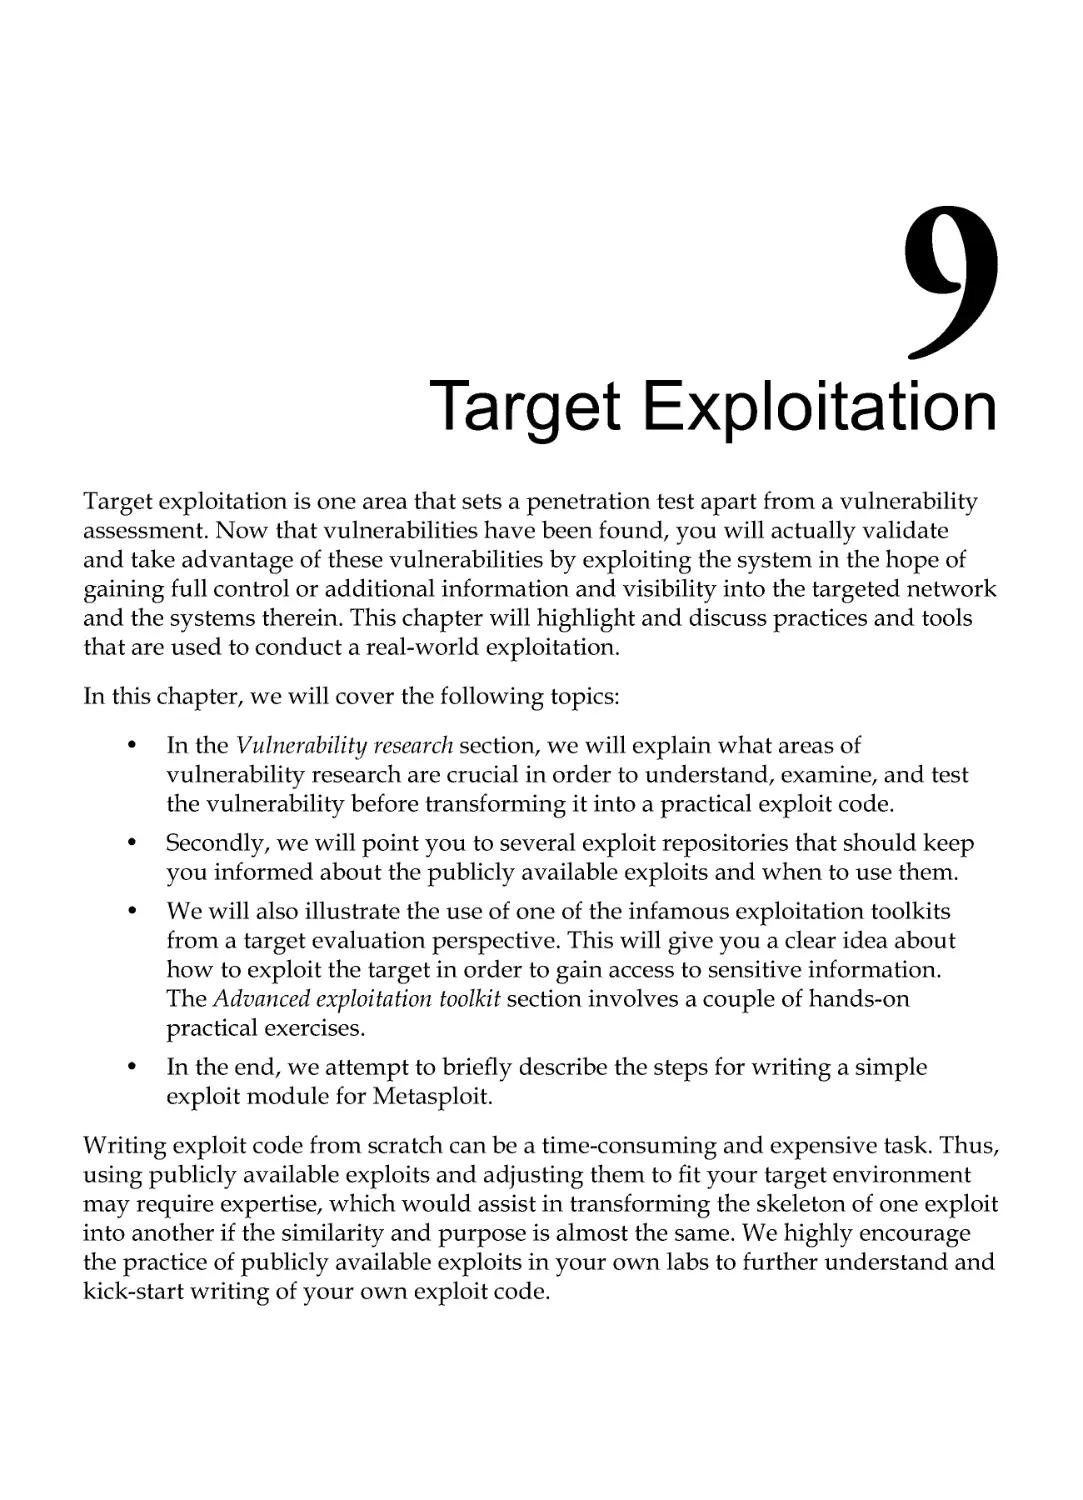 Chapter 9: Target Exploitation